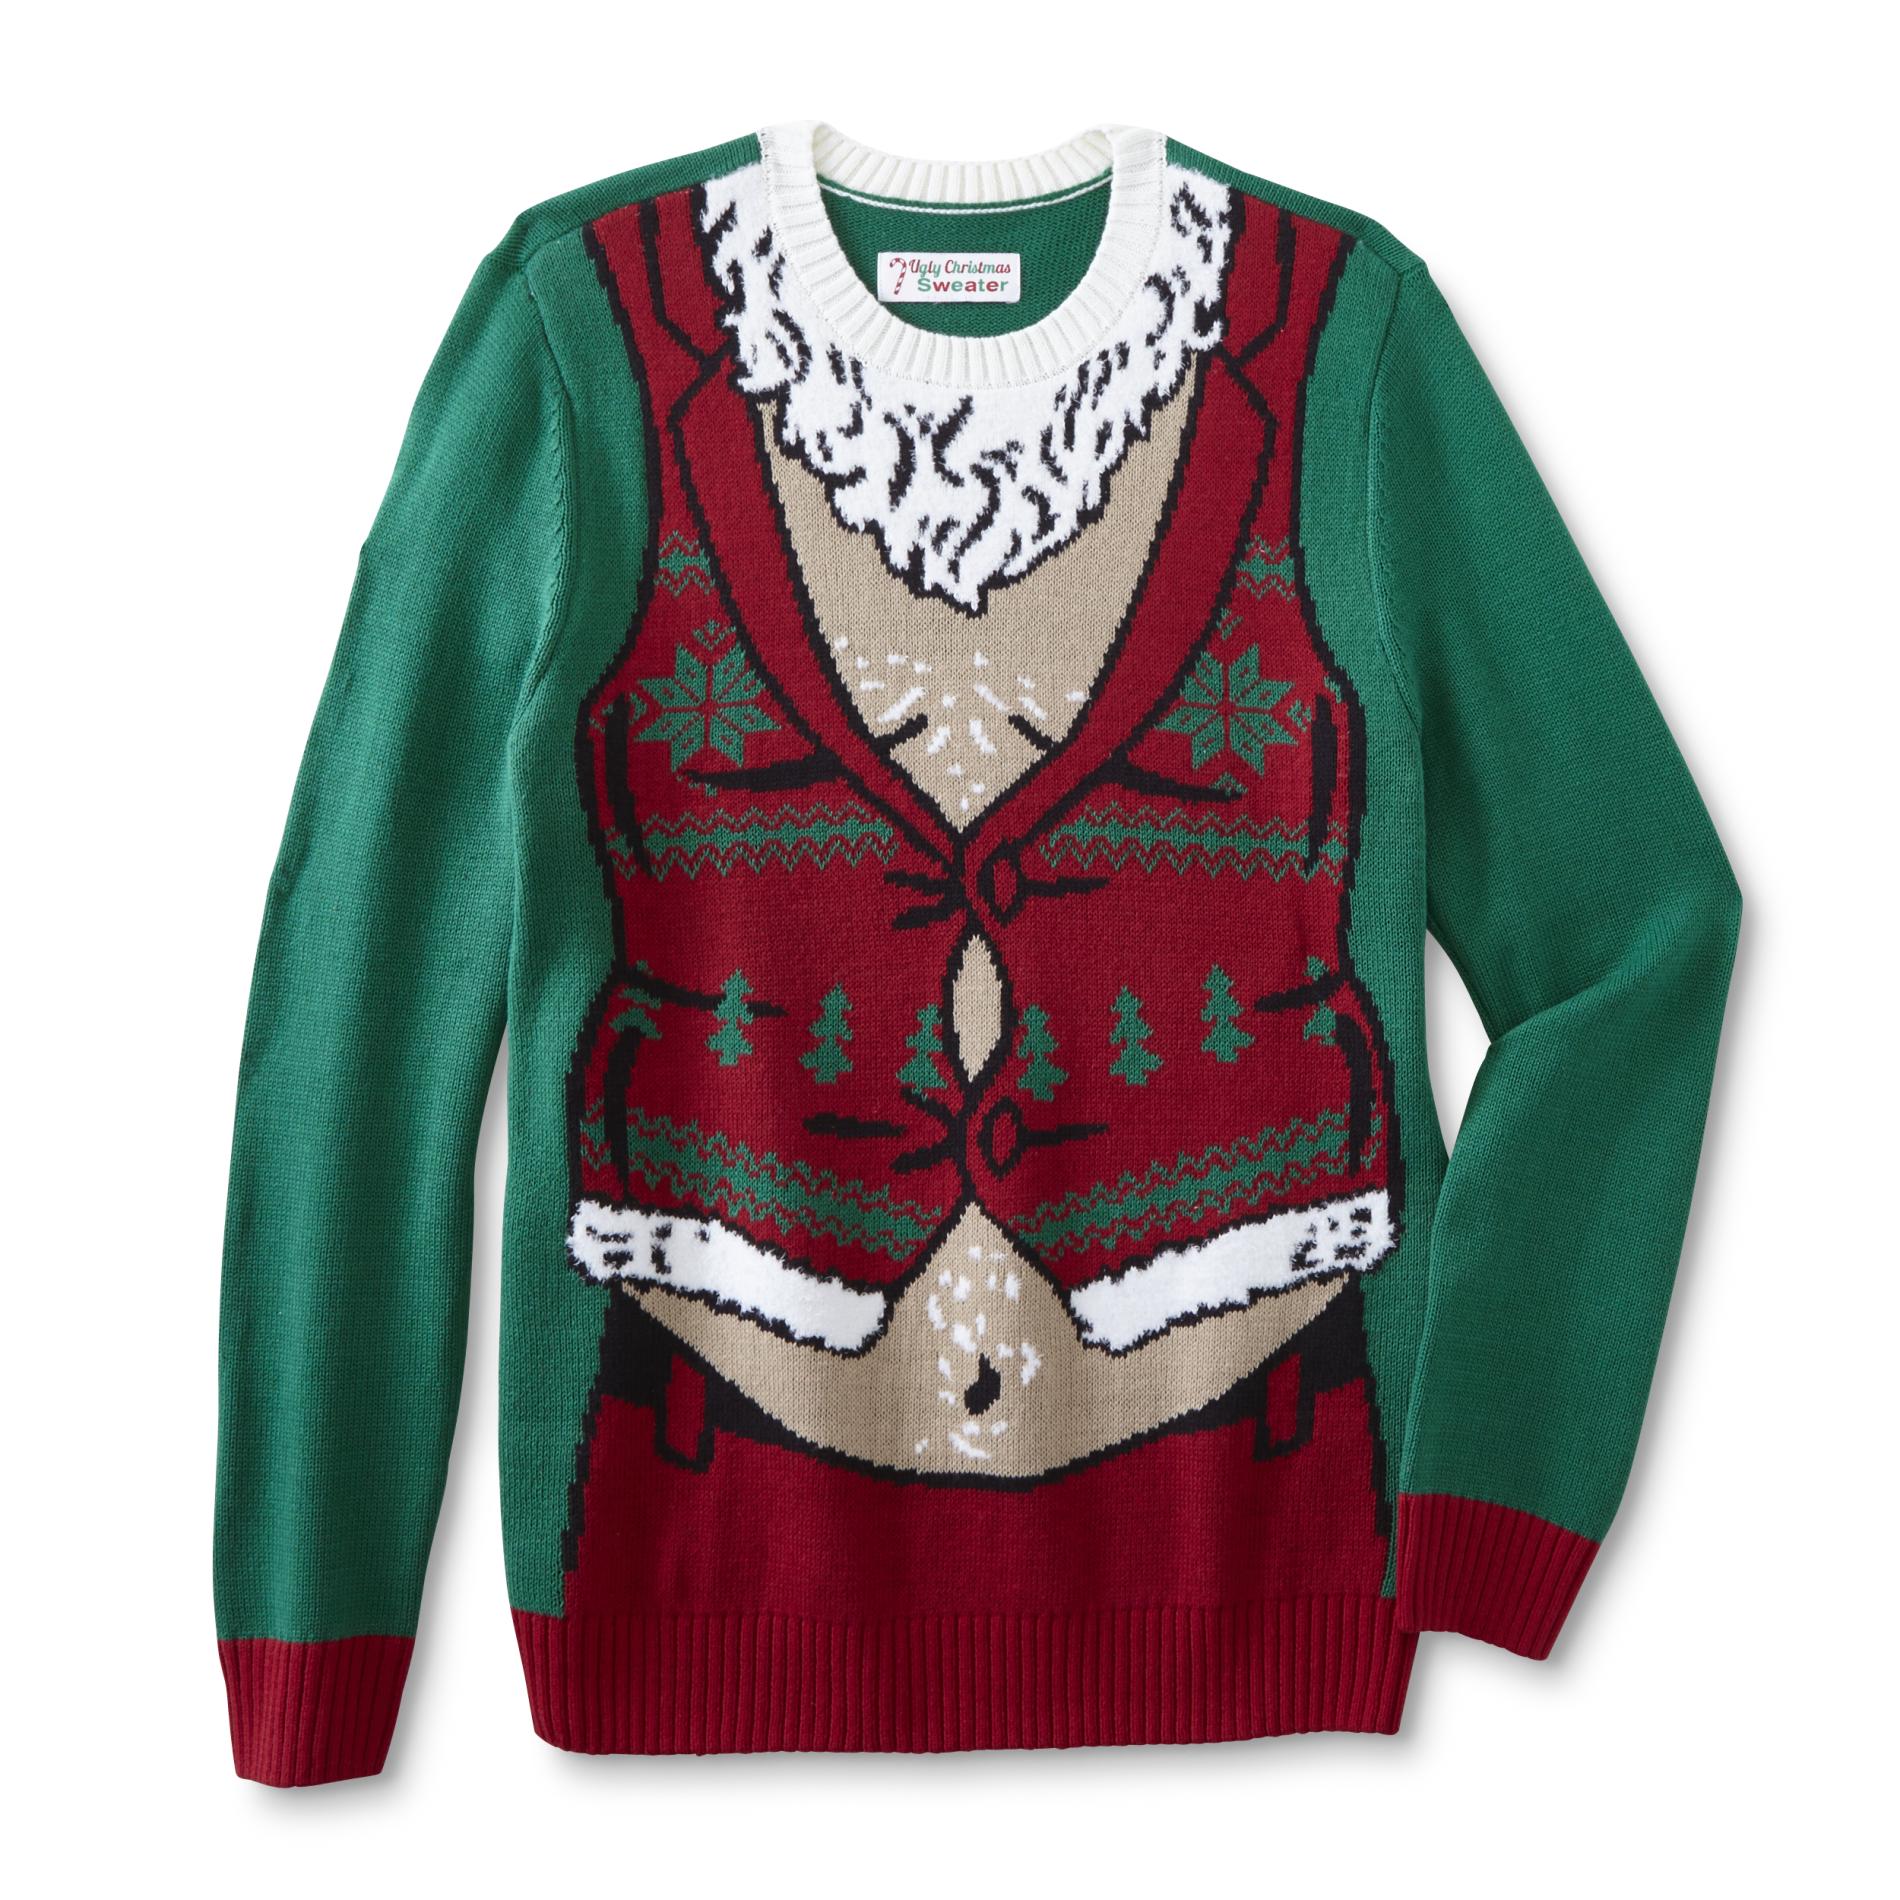 Young Men's Ugly Christmas Sweater - Santa